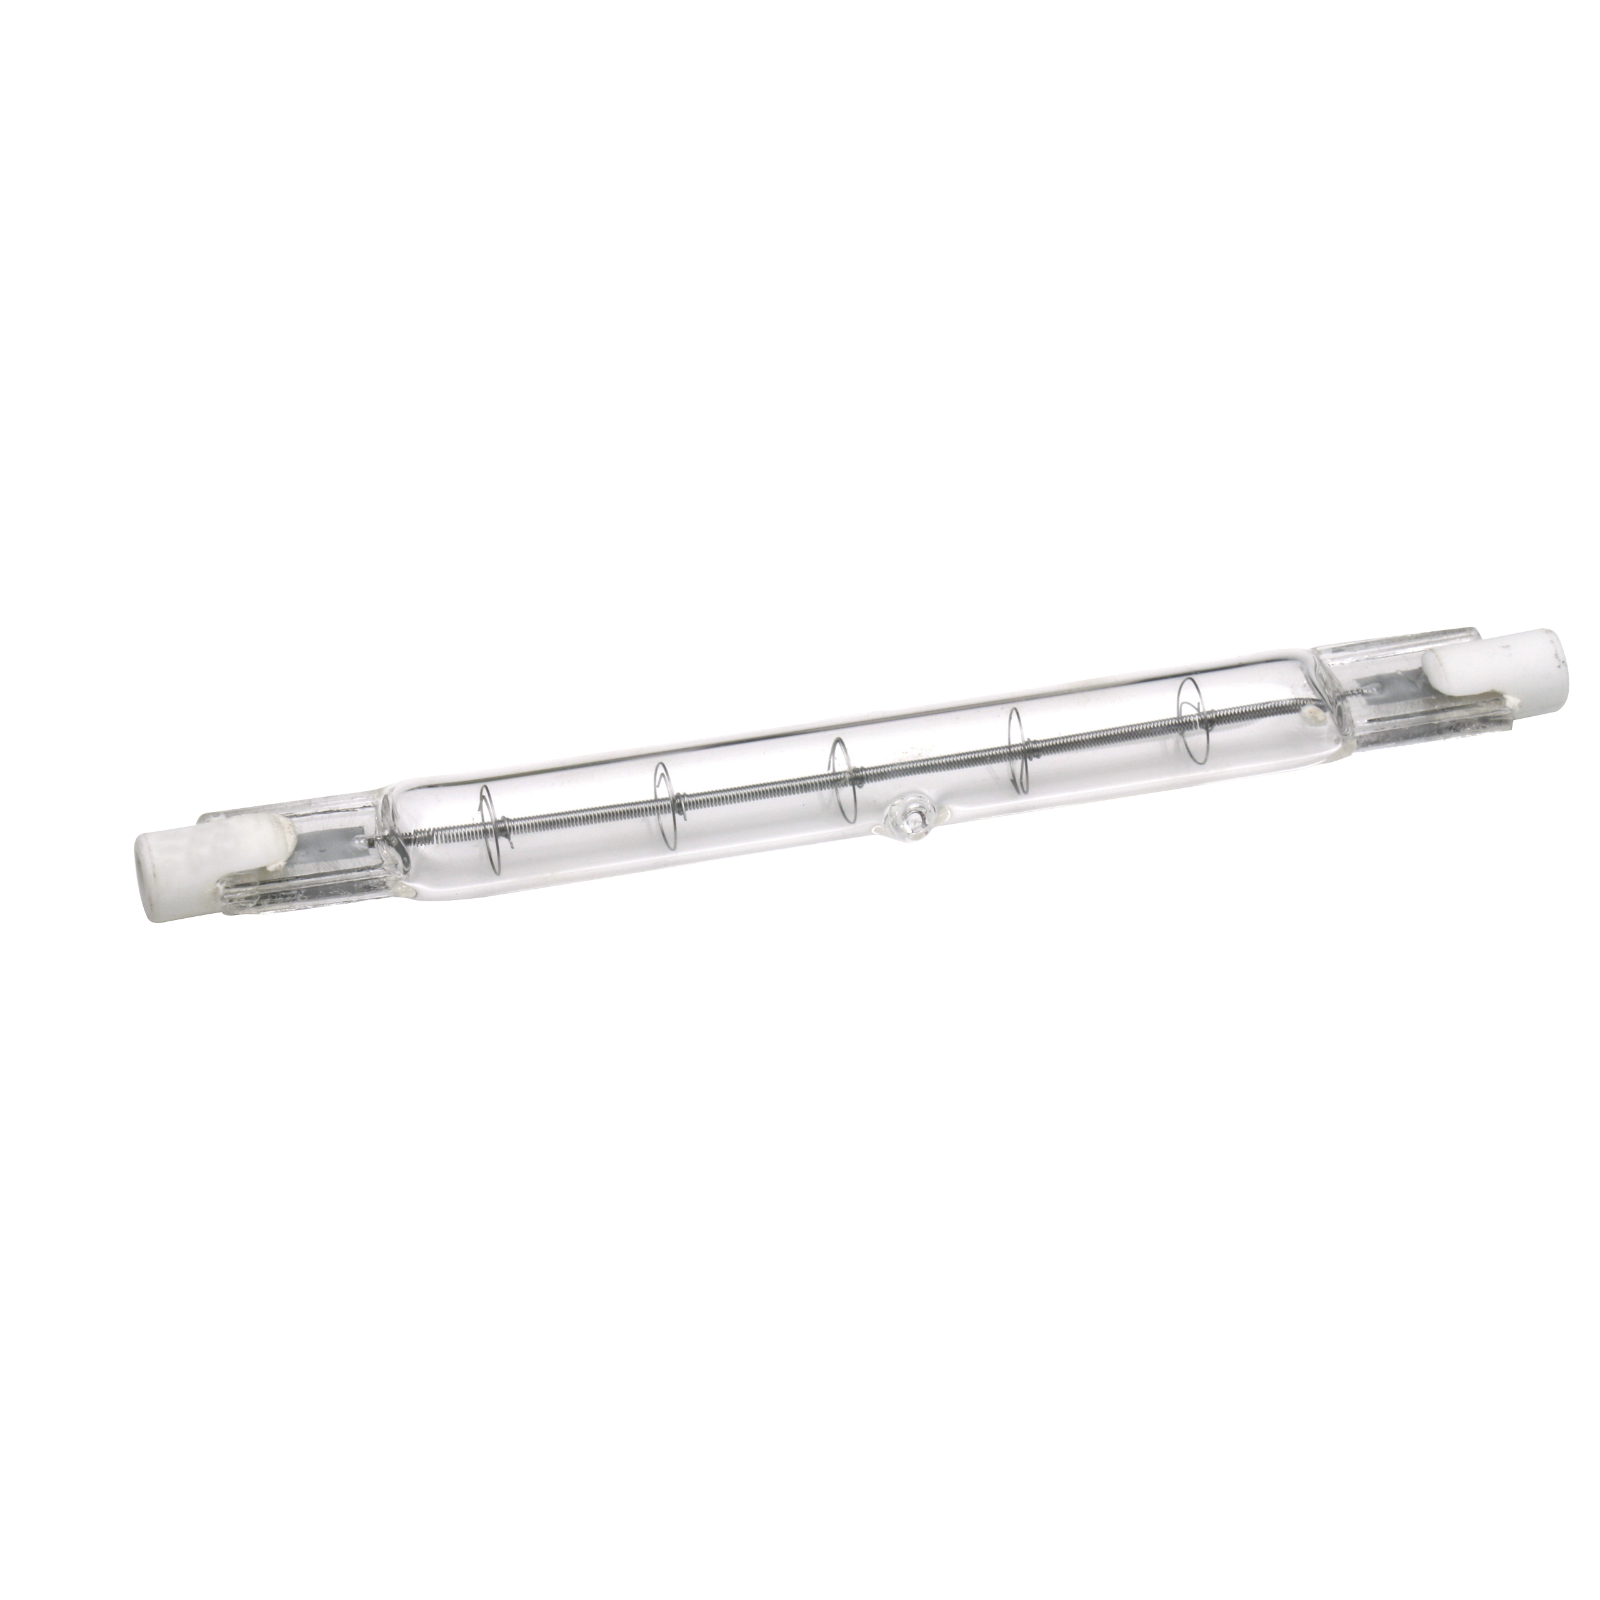 230V 1000W Tungsten Halogen Lamp 189mm Warm White (Replaces 100W) - L1000 